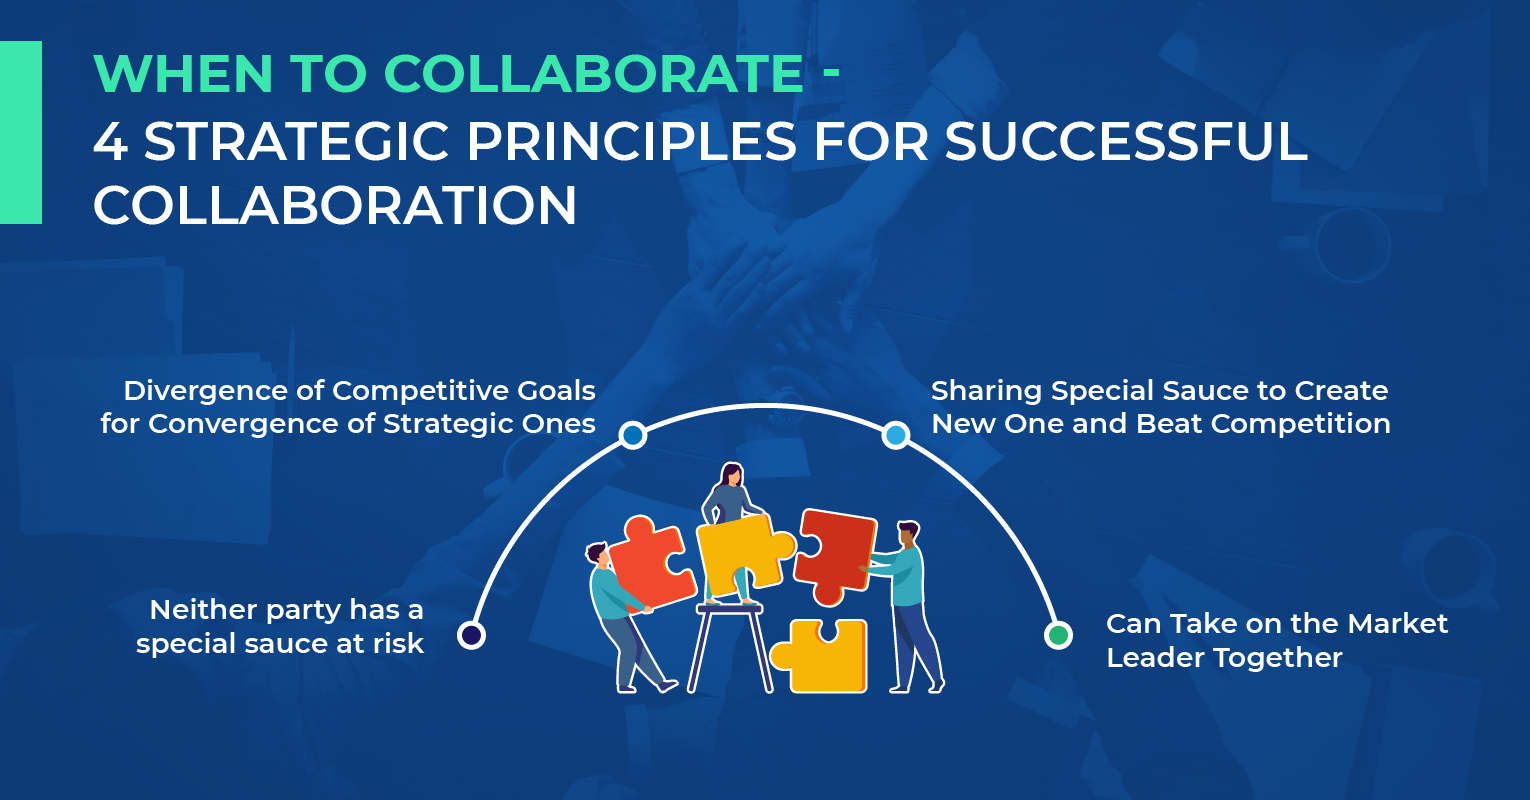 4 Strategic principles that should guide collaboration